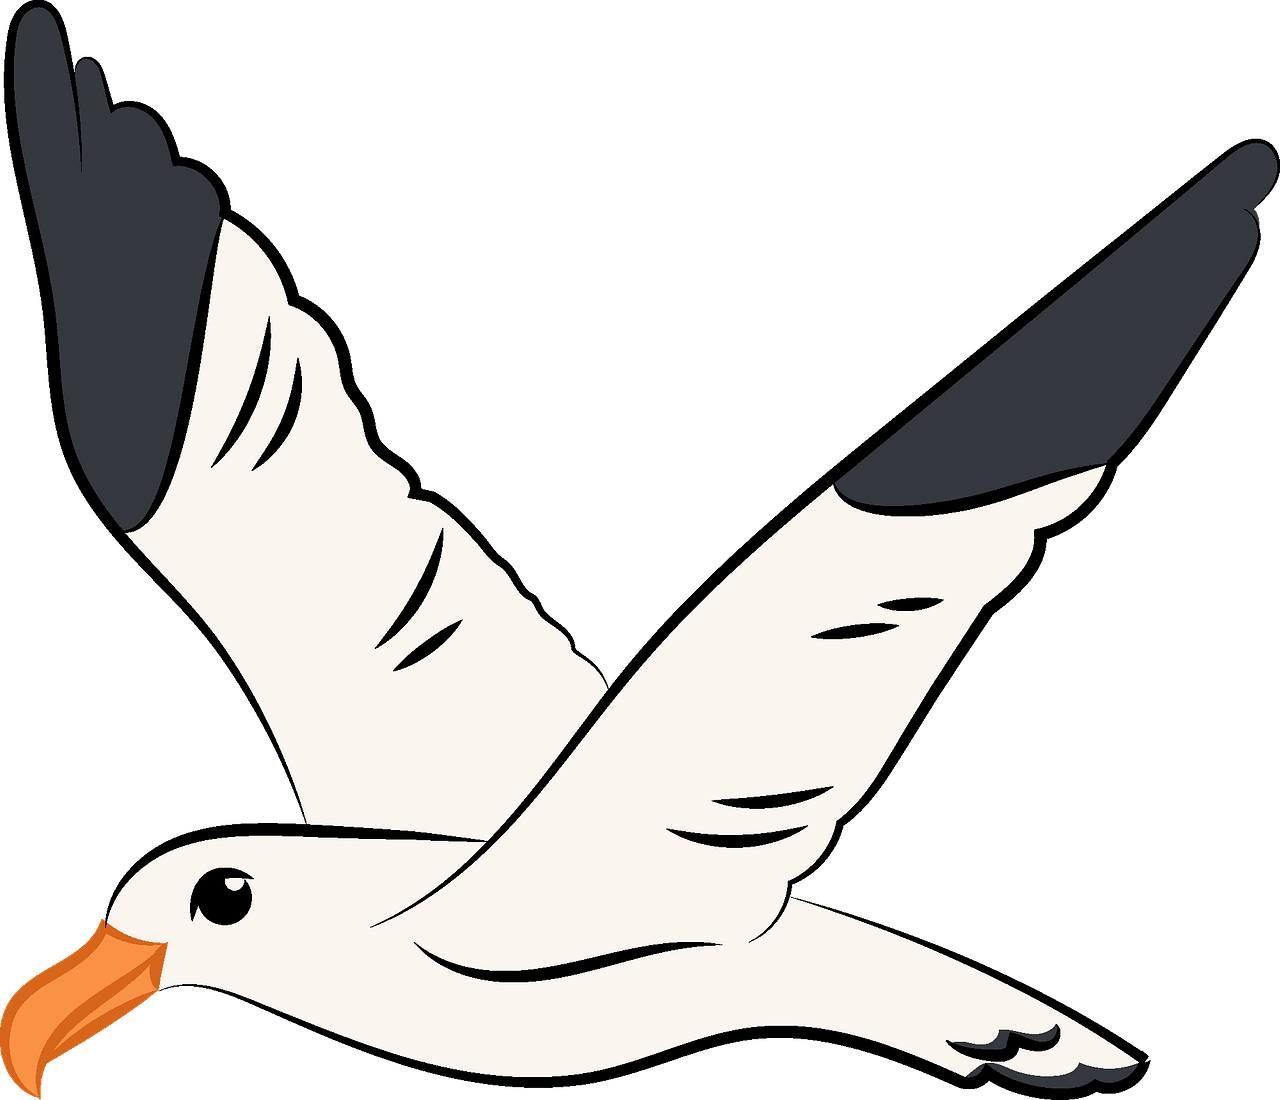 Soaring Seagull Illustration PNG image